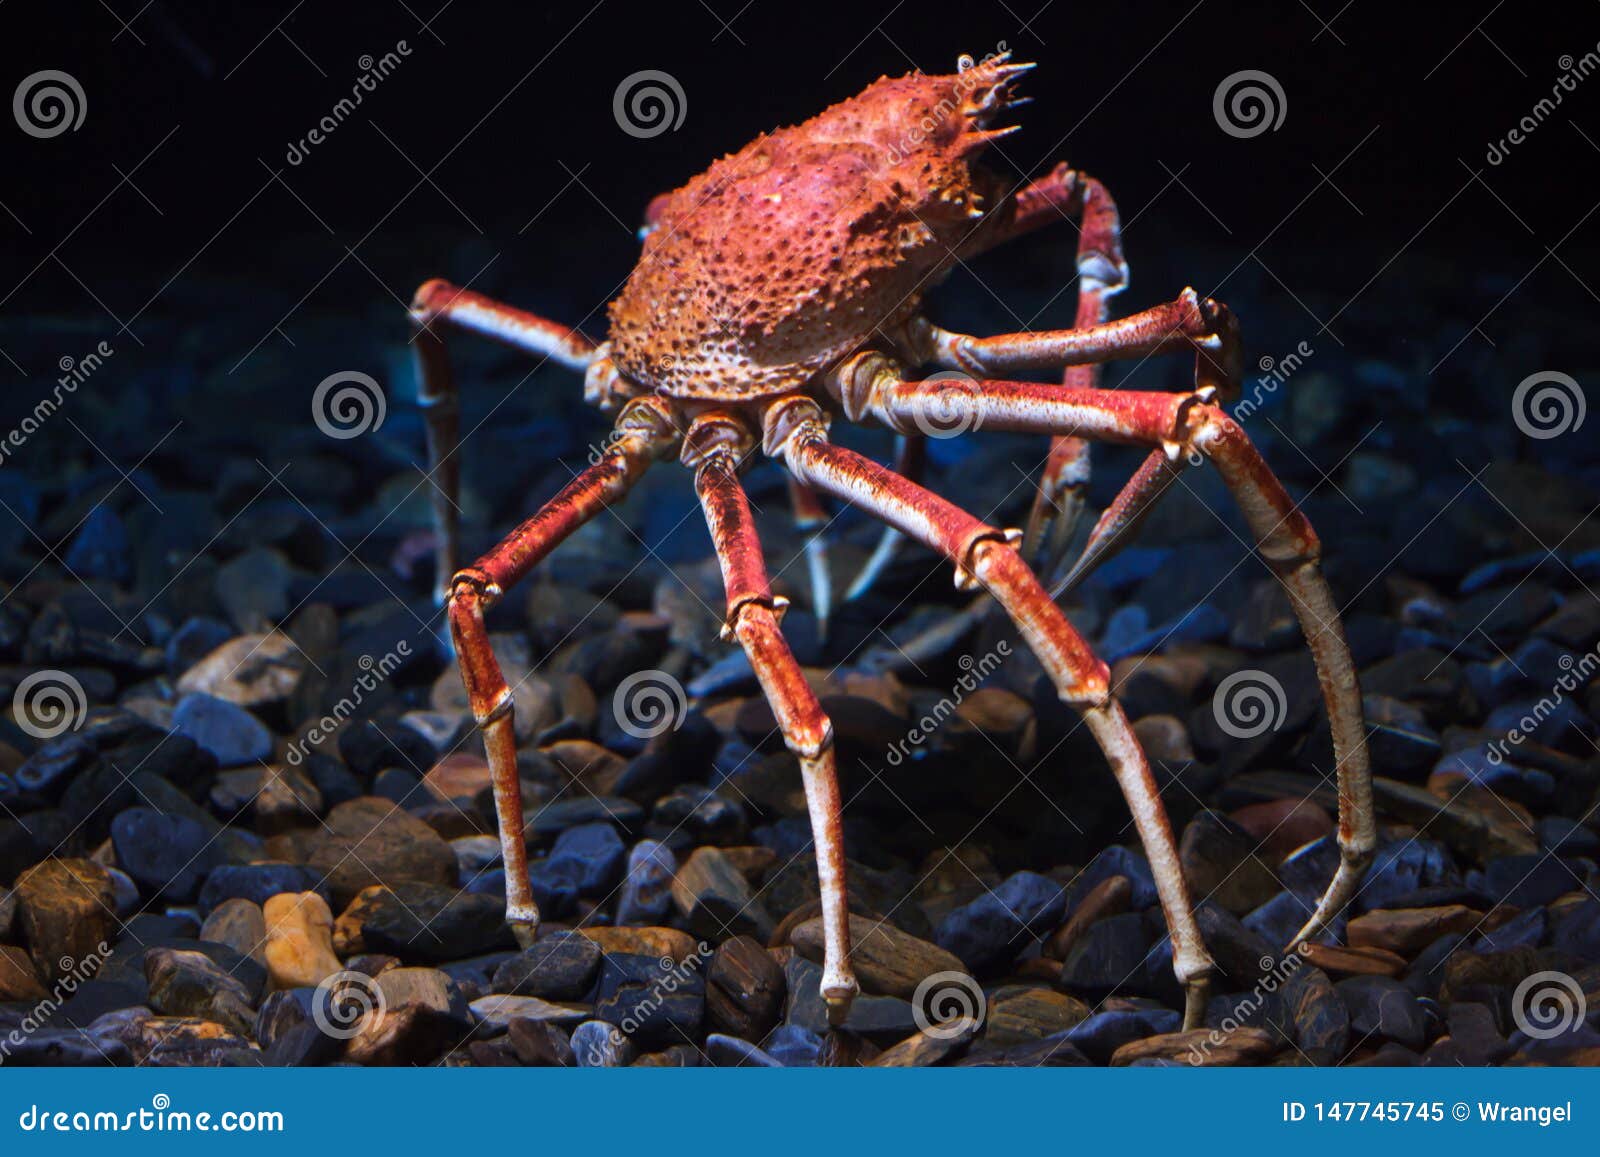 Japanese Spider Crab Macrocheira Kaempferi Stock Image Image Of Inachus Endemic